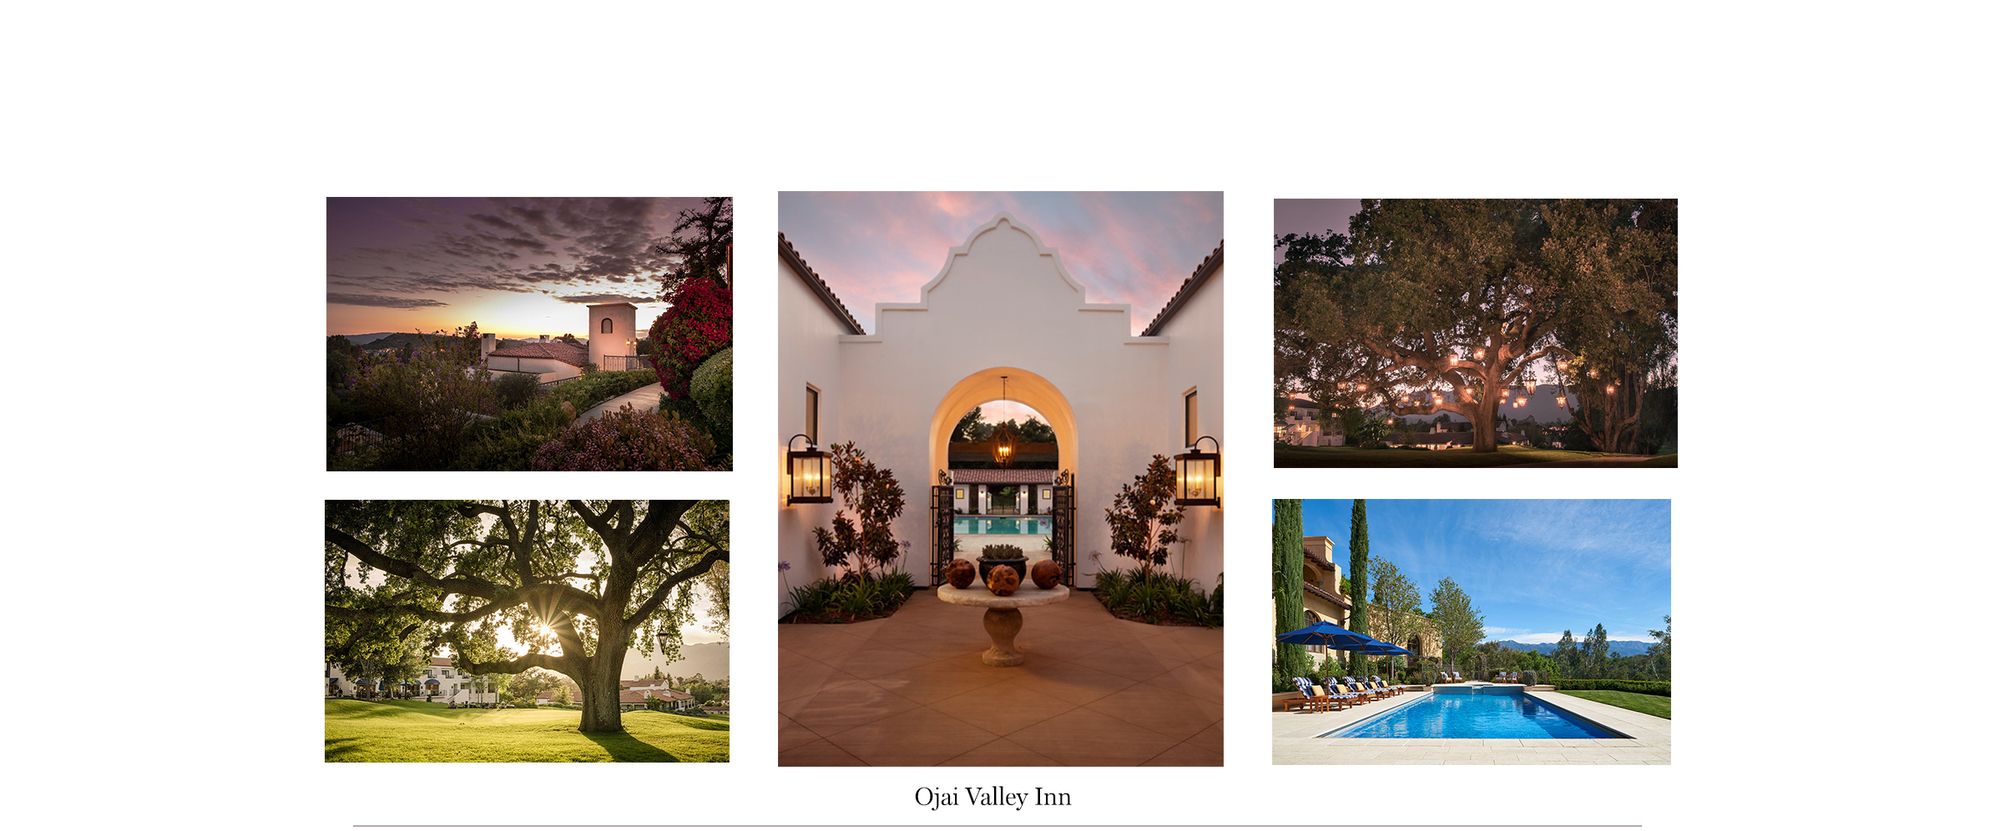 Ojai Valley Inn & Spa